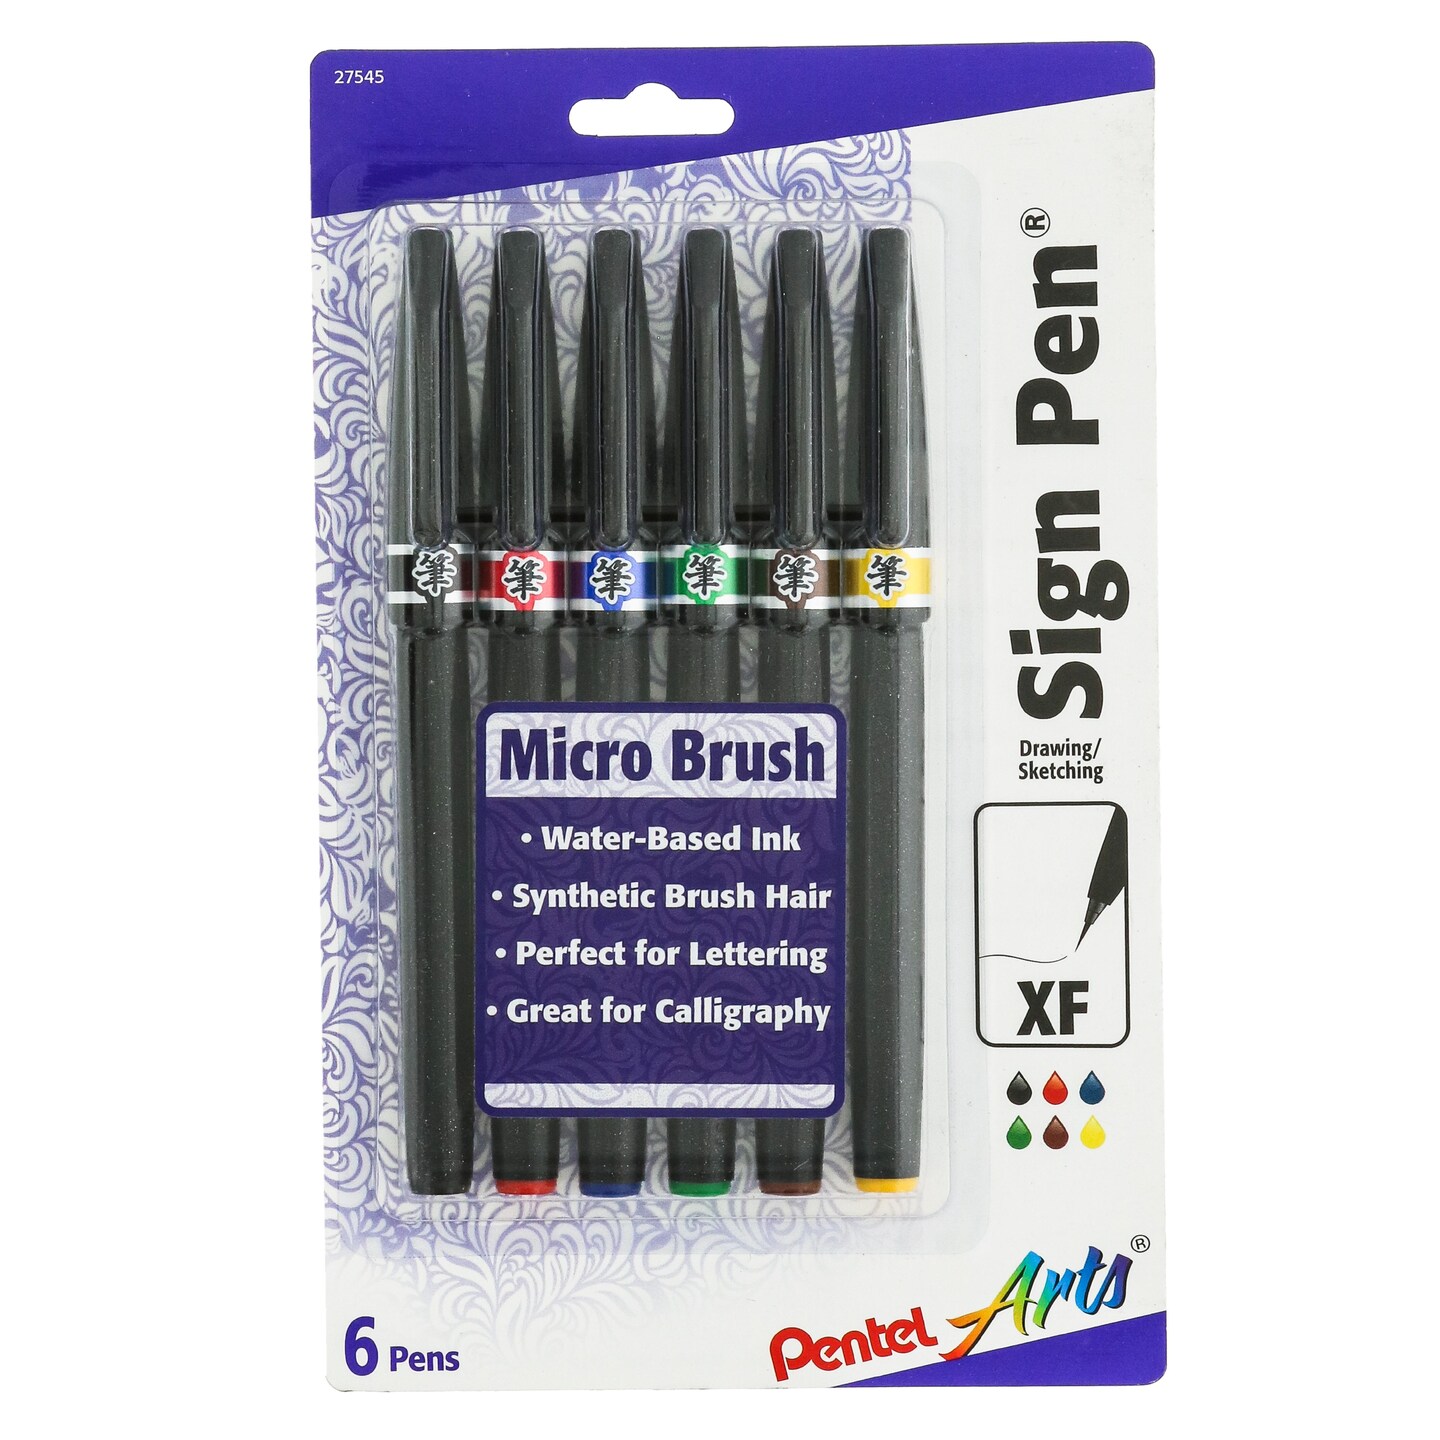 Pentel Arts Black Sign Pen with Brush Tip